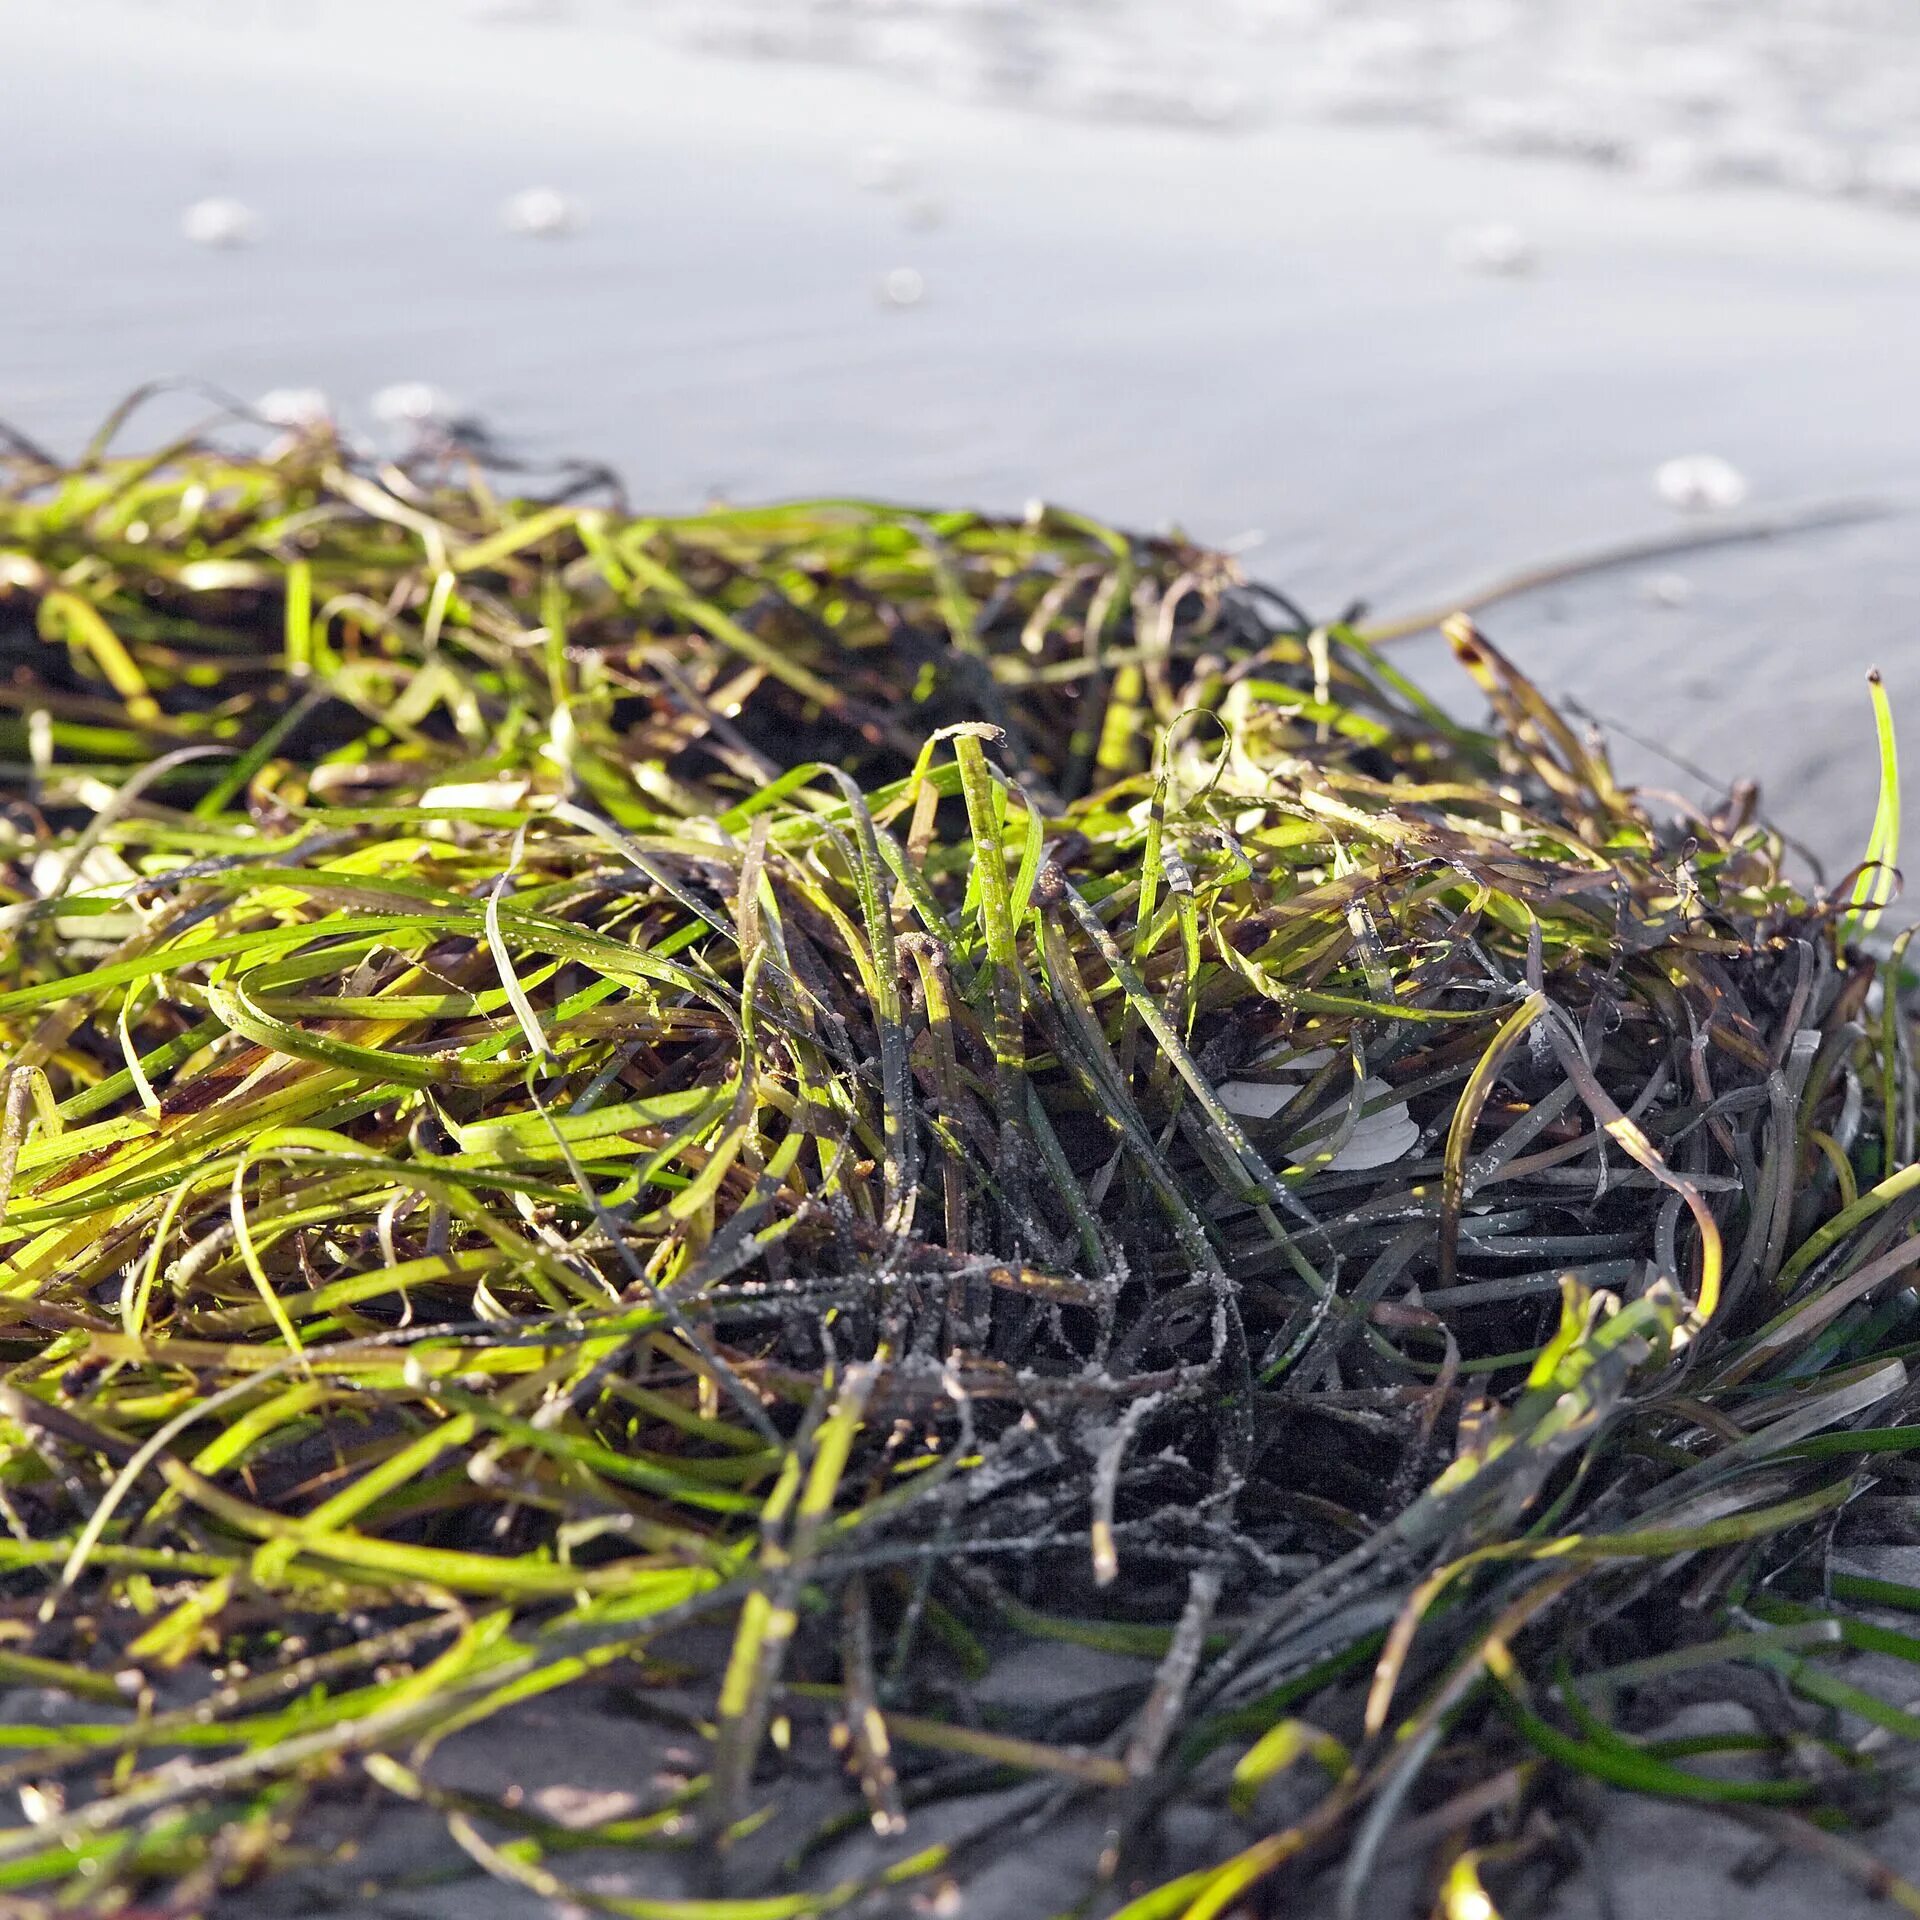 Морская трава. Водоросли на суше. Водоросли в воде и на суше. Груда морской травы.